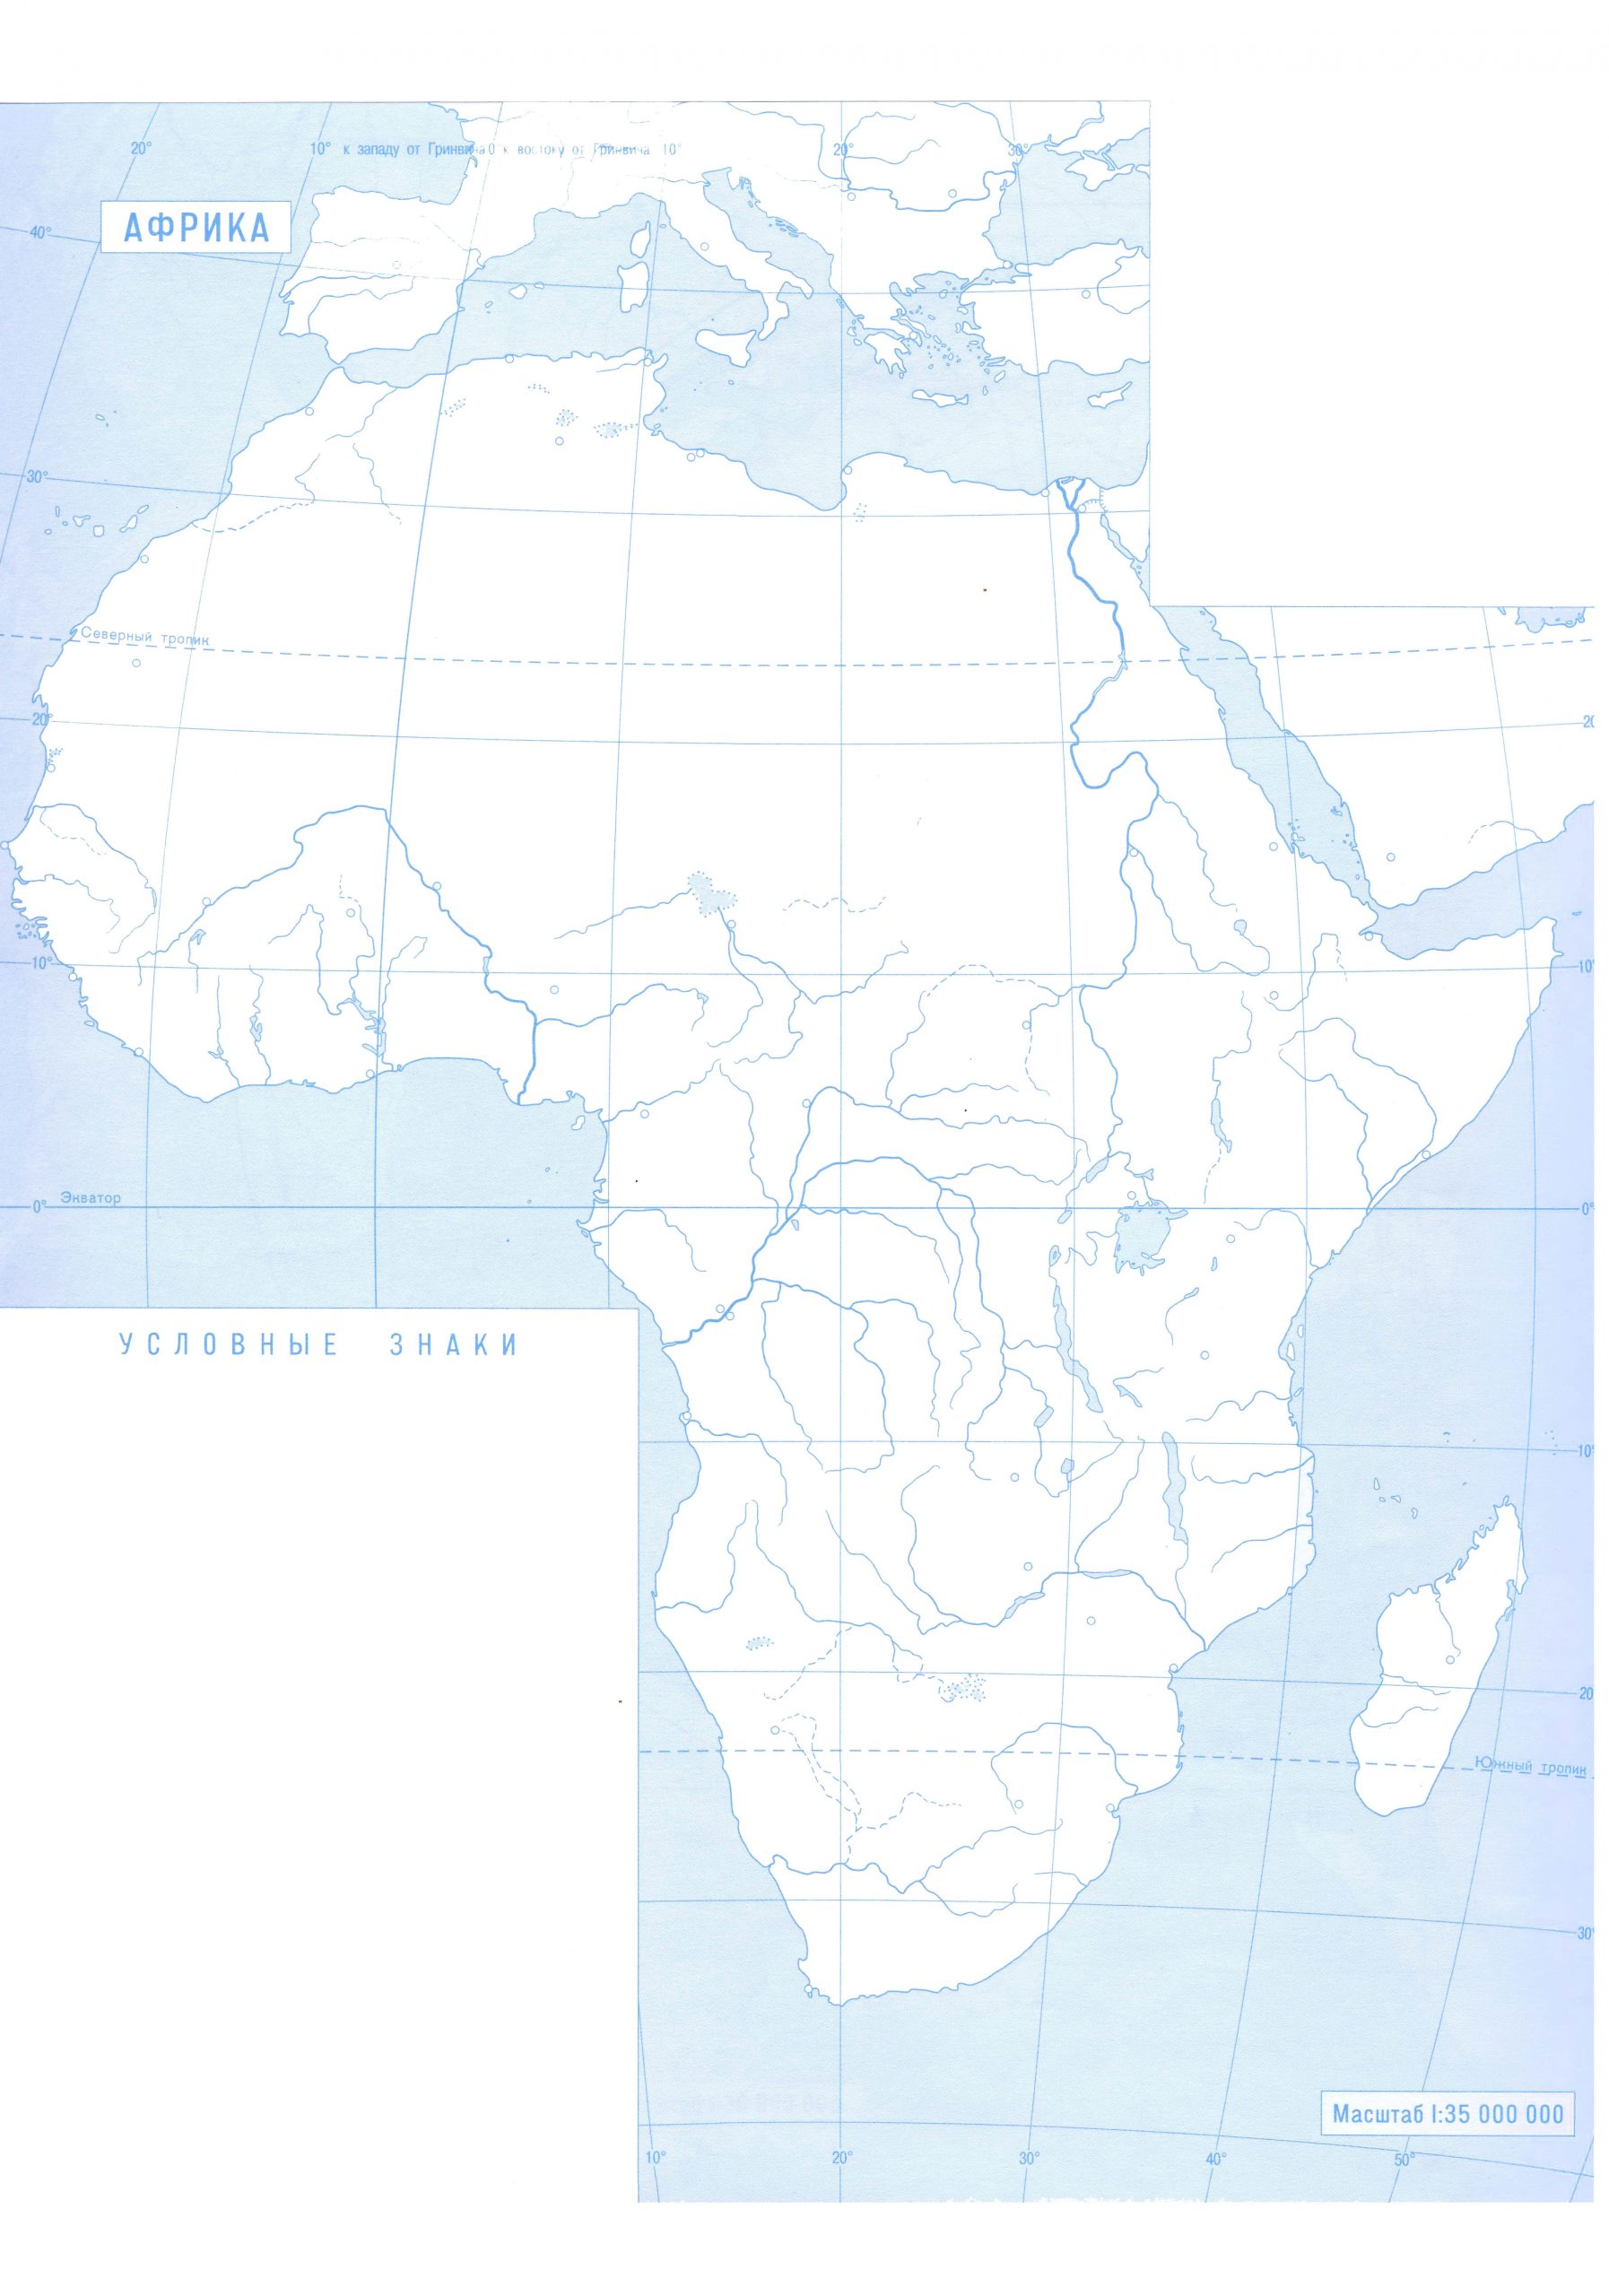 Контурная карта 10 11 класс география африка. Реки Африки на контурной карте 7 класс. ФГП Африки на контурной карте. Контурная карта Африки для печати с реками. Реки и озера Африки на контурной карте 7 класс география.